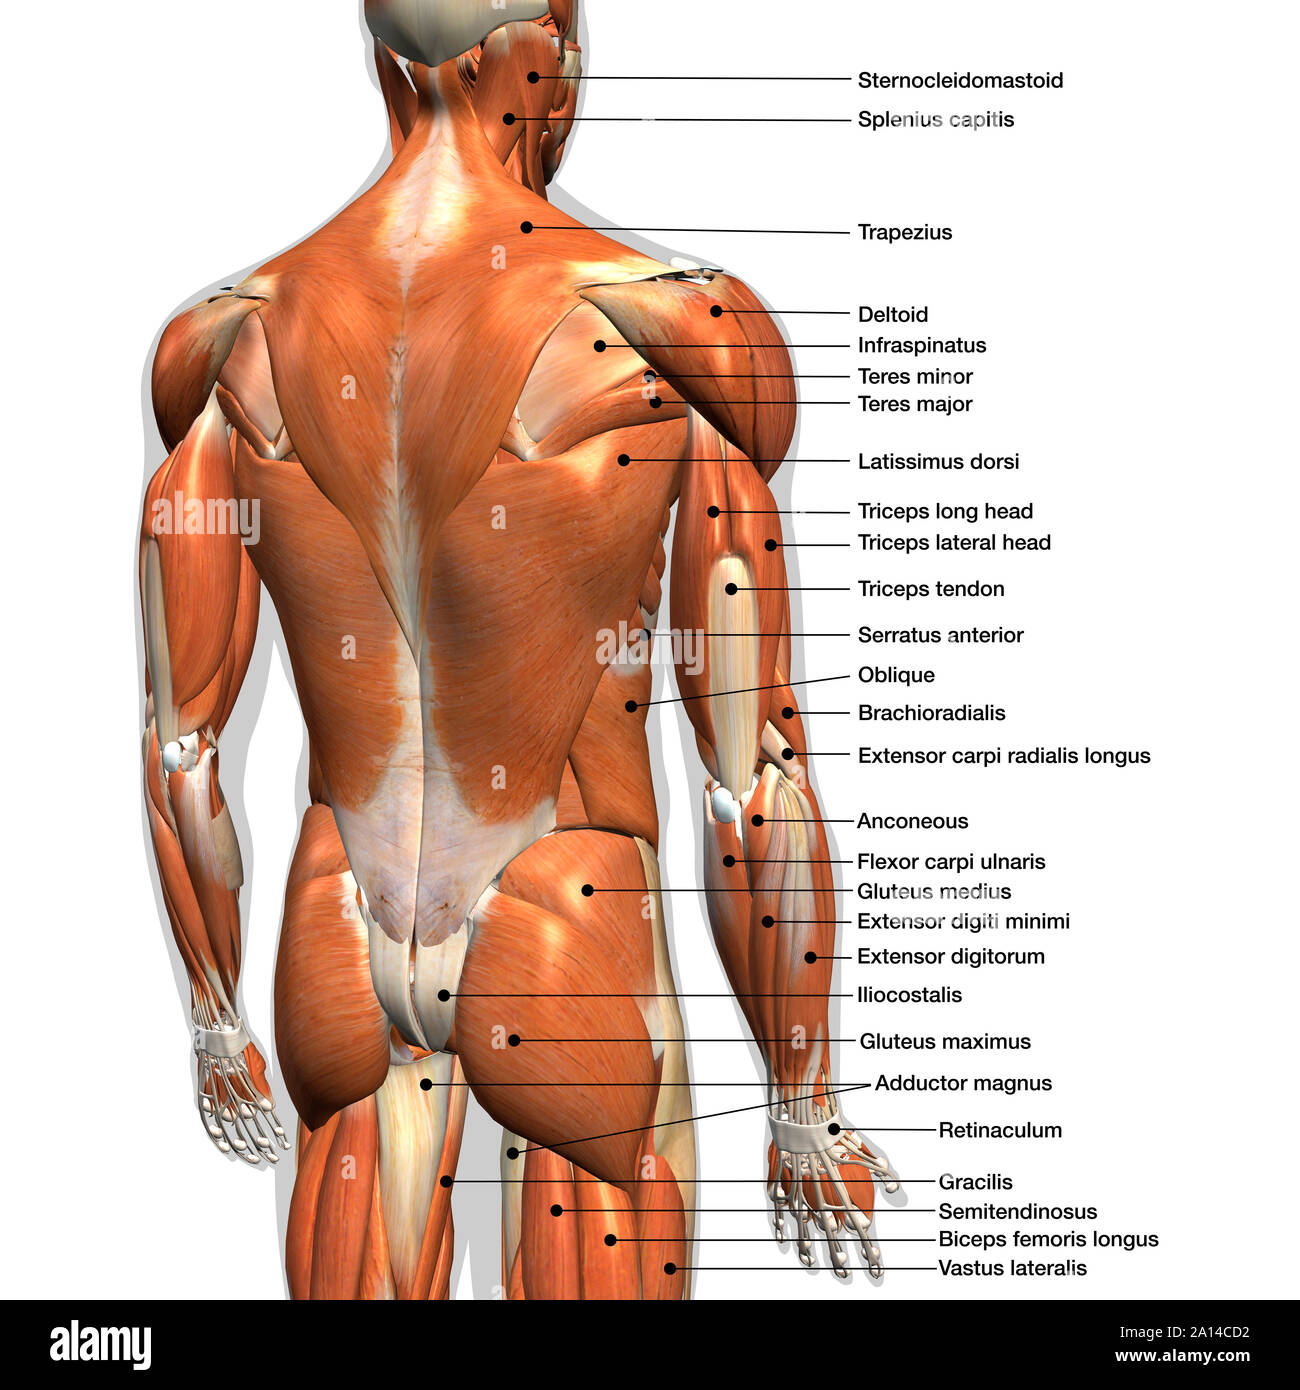 Anatomy Of Human Buttocks High Resolution Stock Photography And